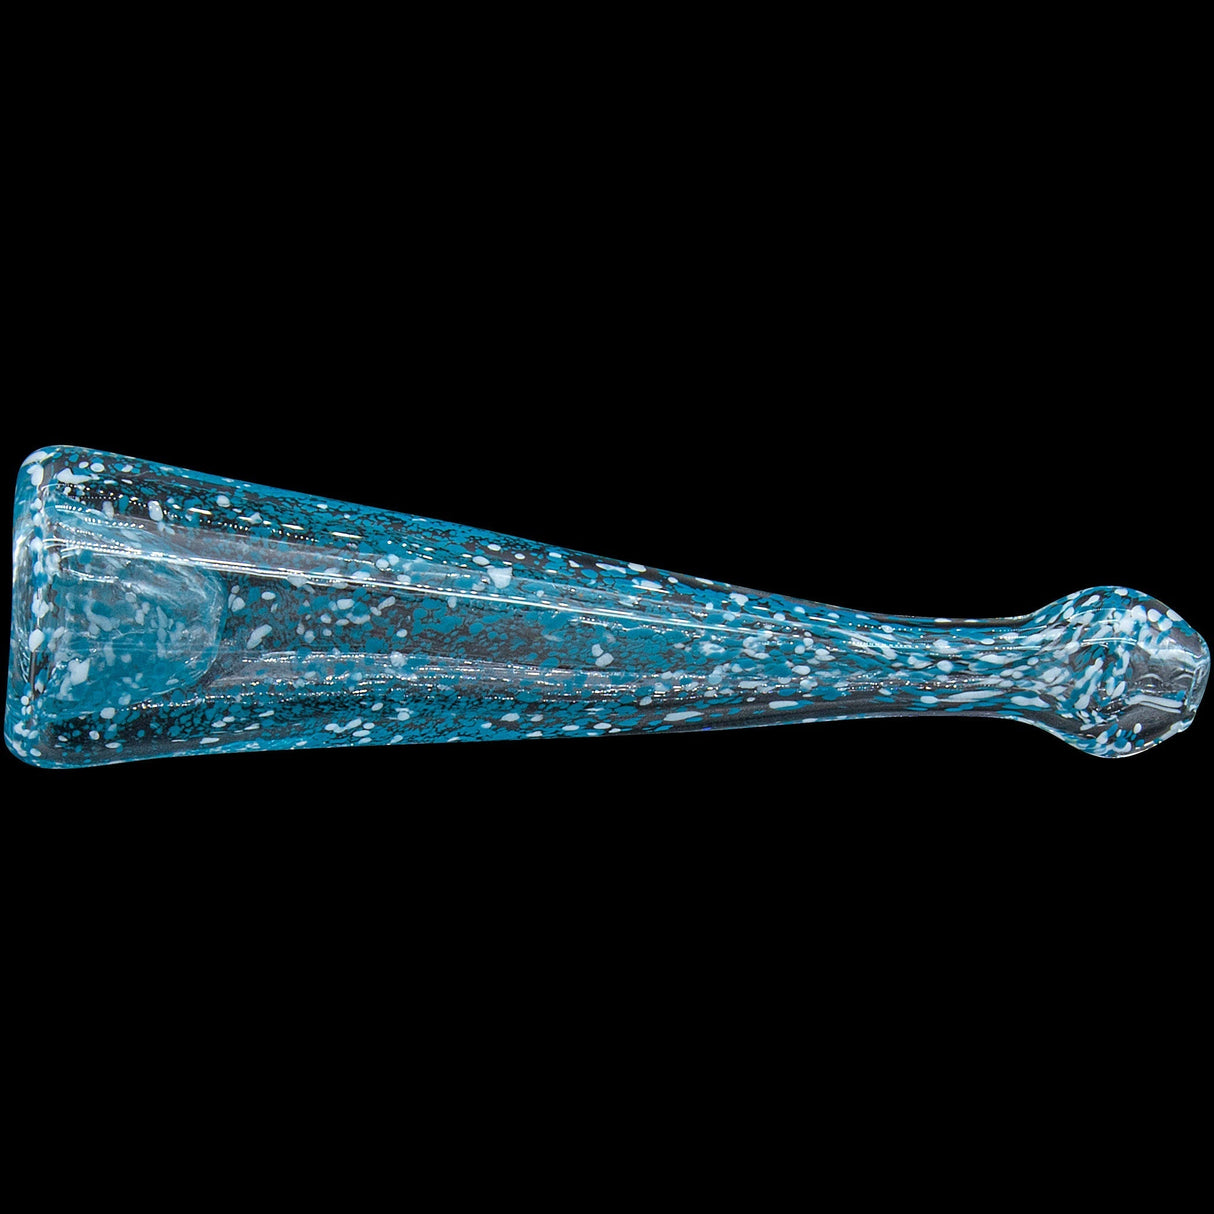 LA Pipes "Magic Dust" Frit Chillum - 4.5" Color-Changing Borosilicate Glass